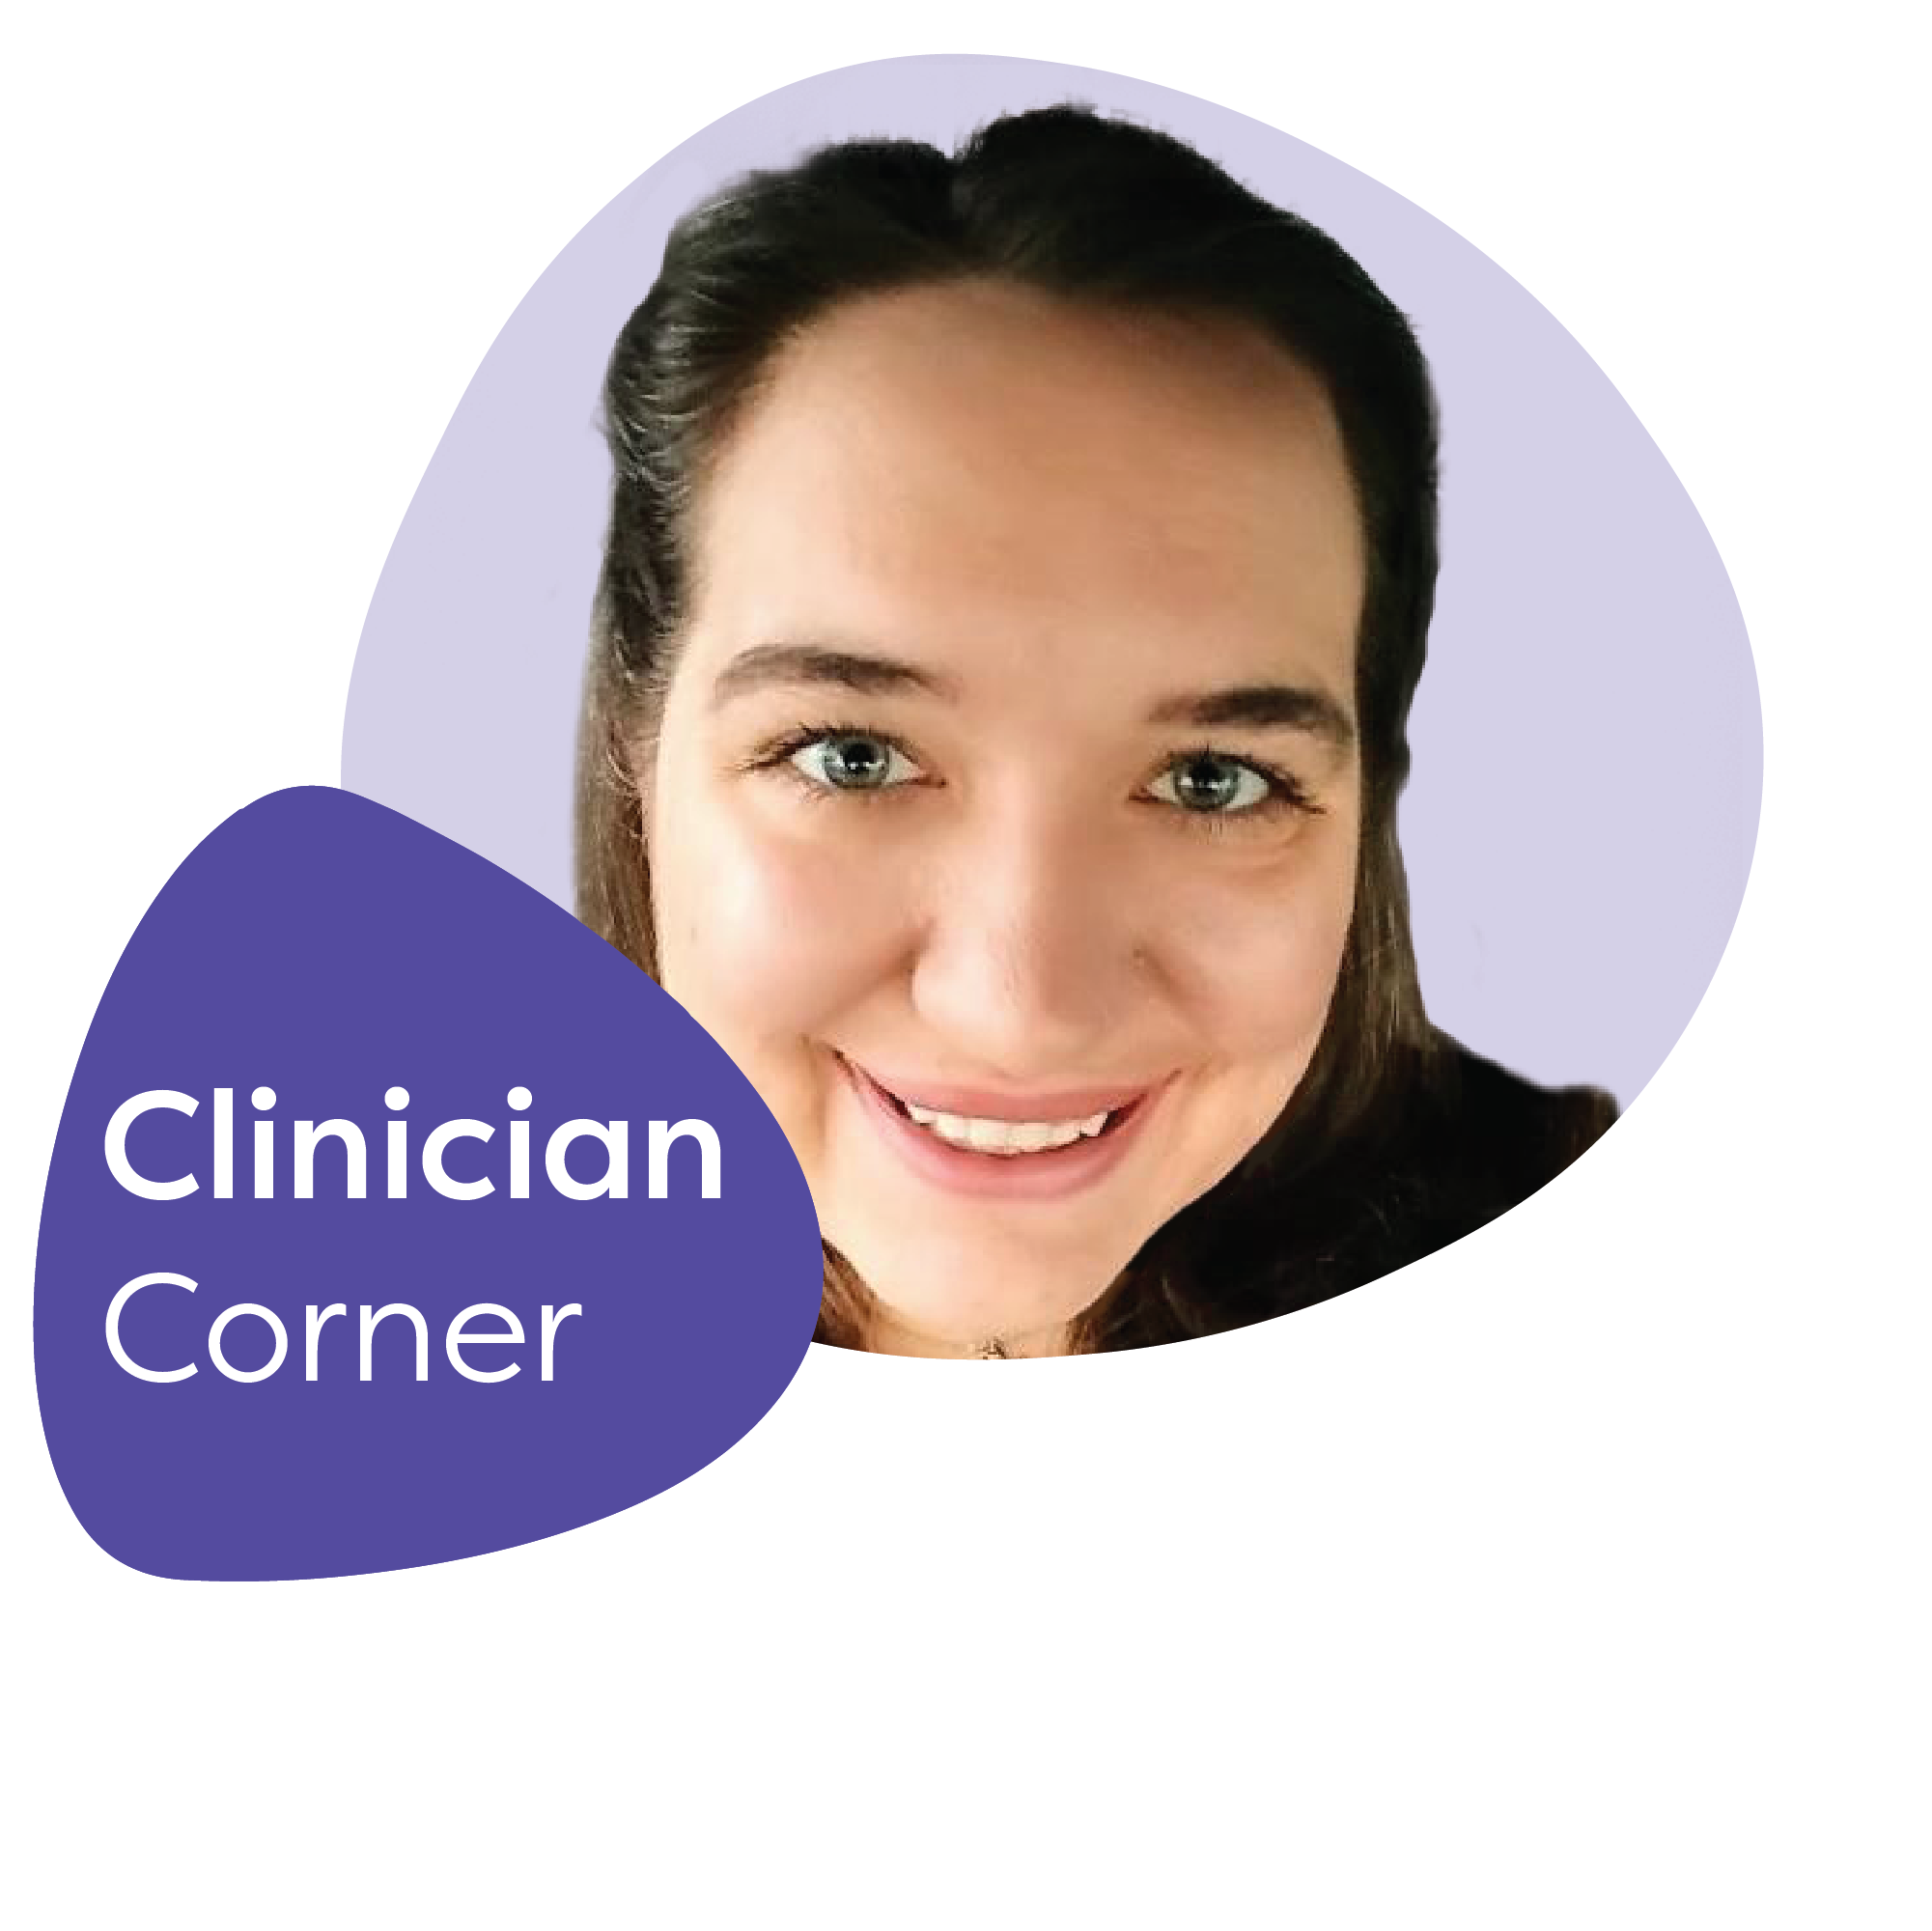 Clinician Corner: Meet Nicole Bradbury, LCSW